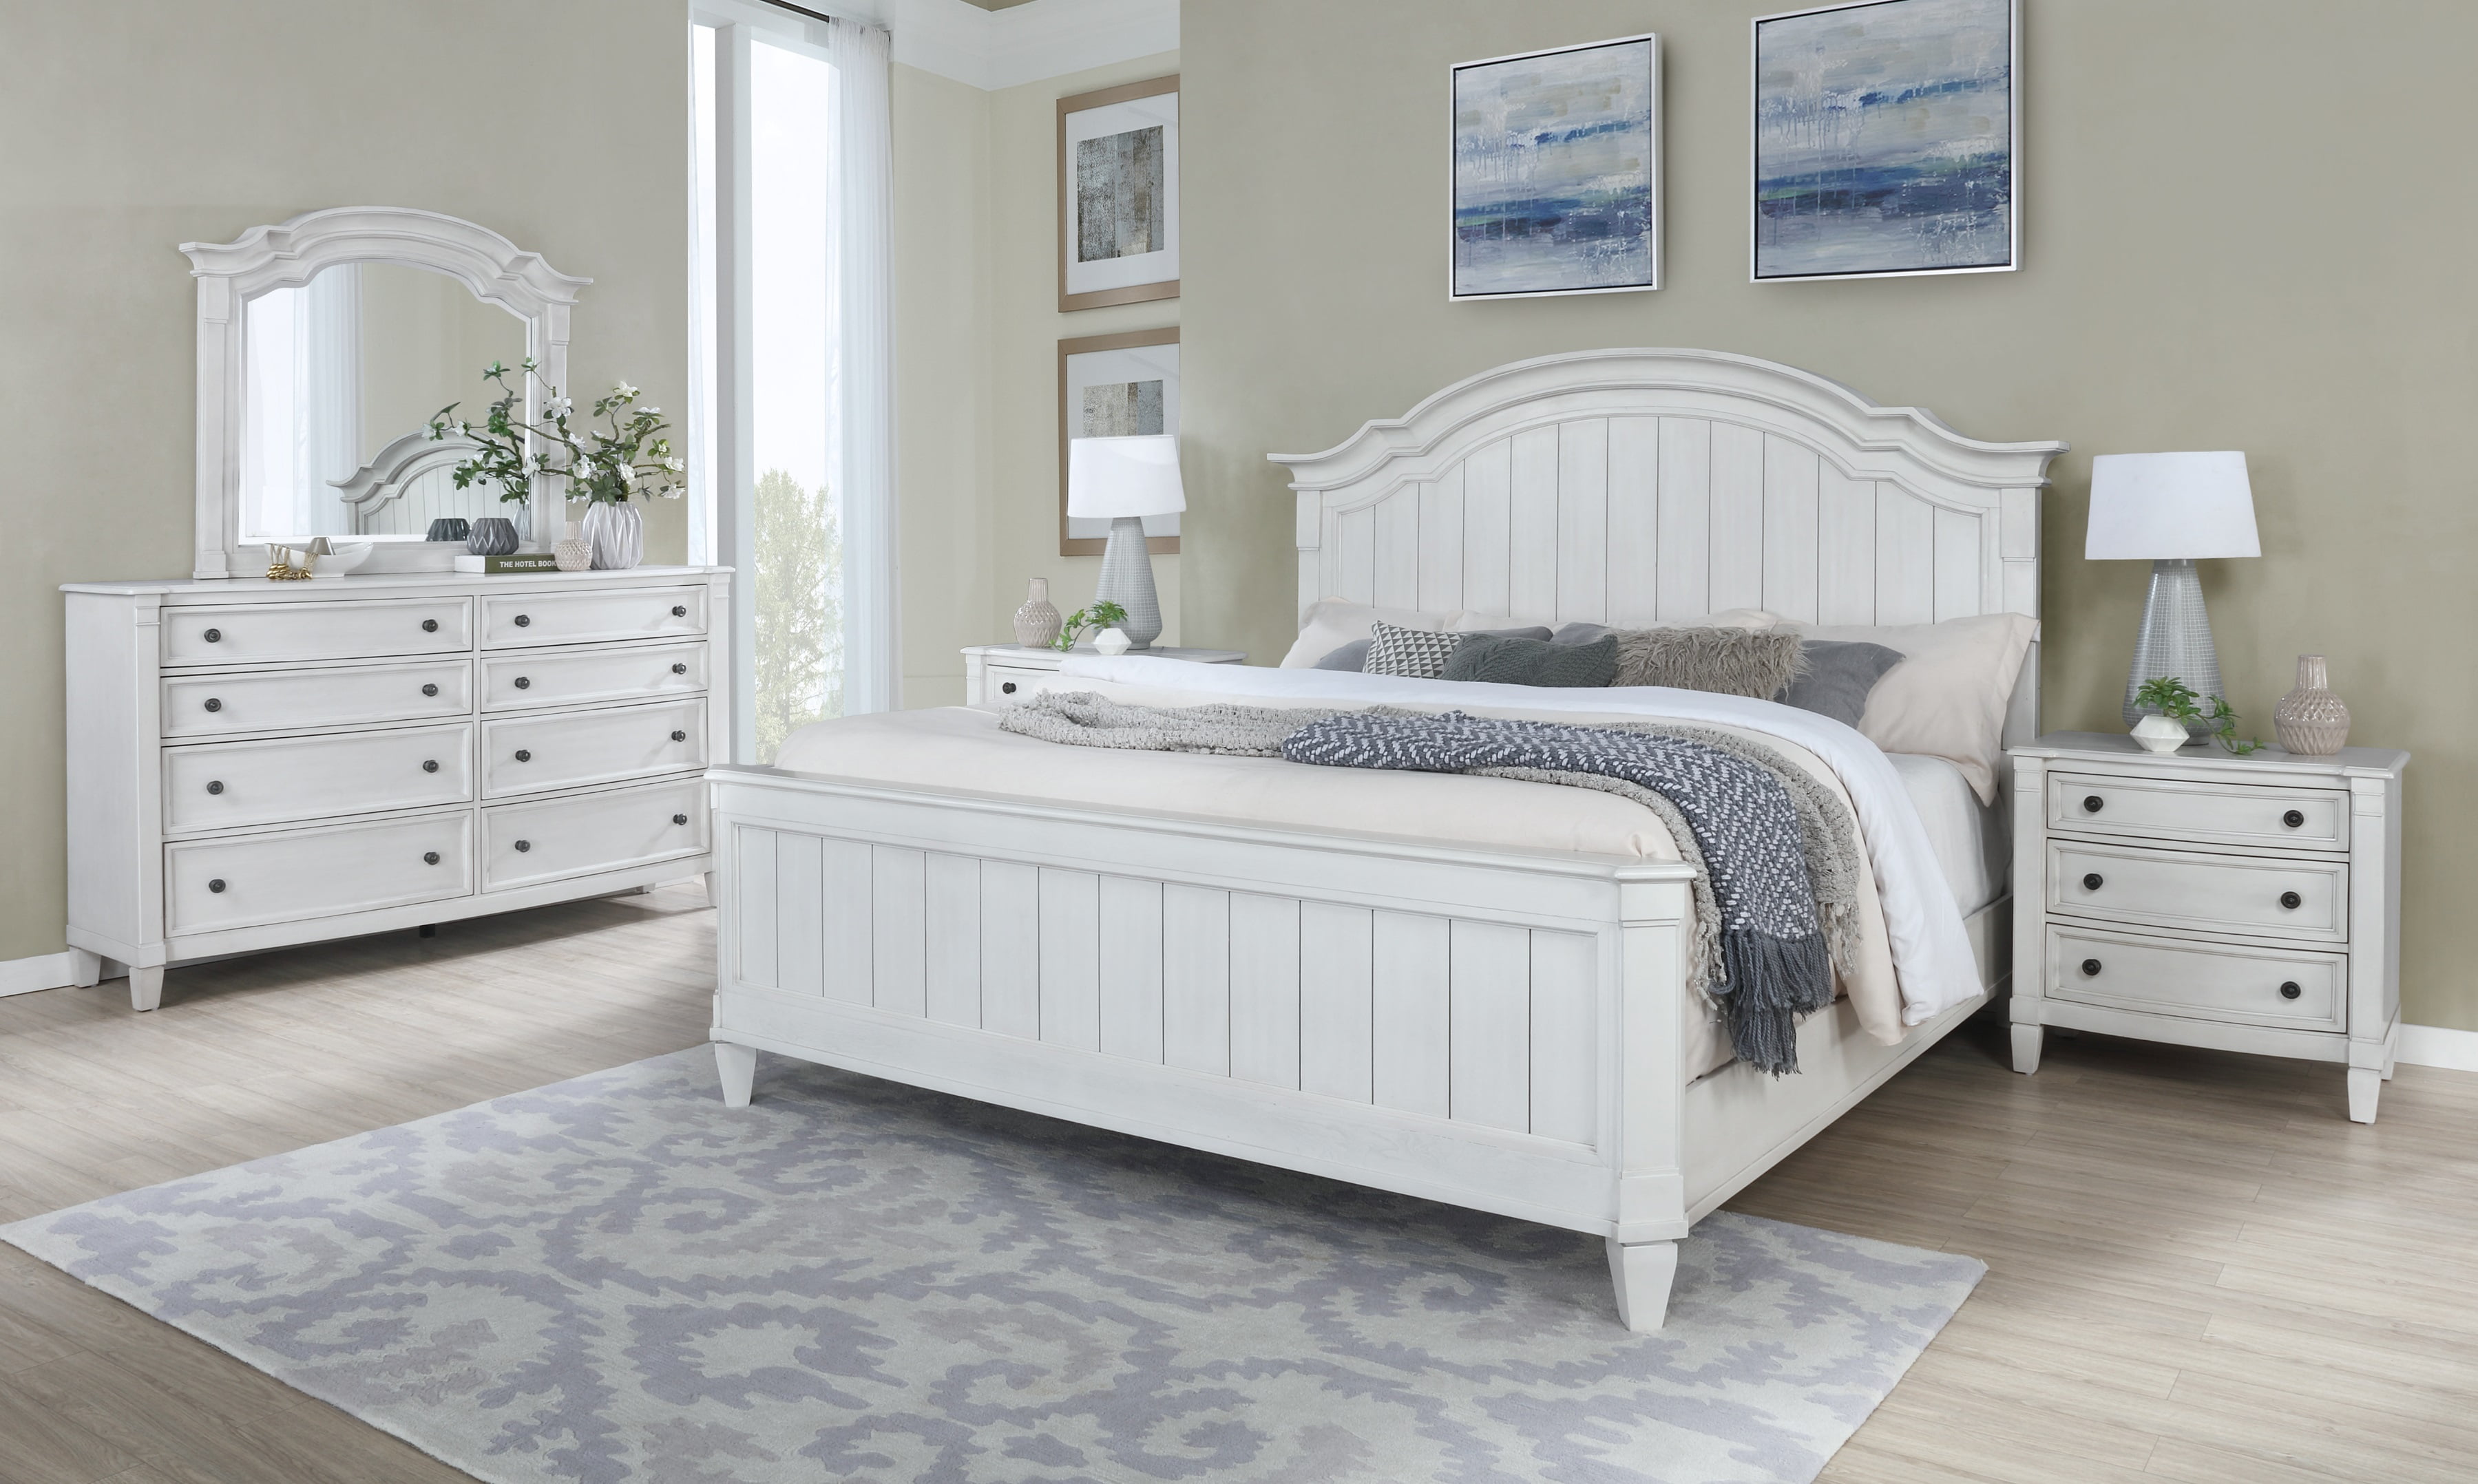 MYRA 5 pieces Modern White Bedroom Set with King Bed Dresser Mirror Nightstands 